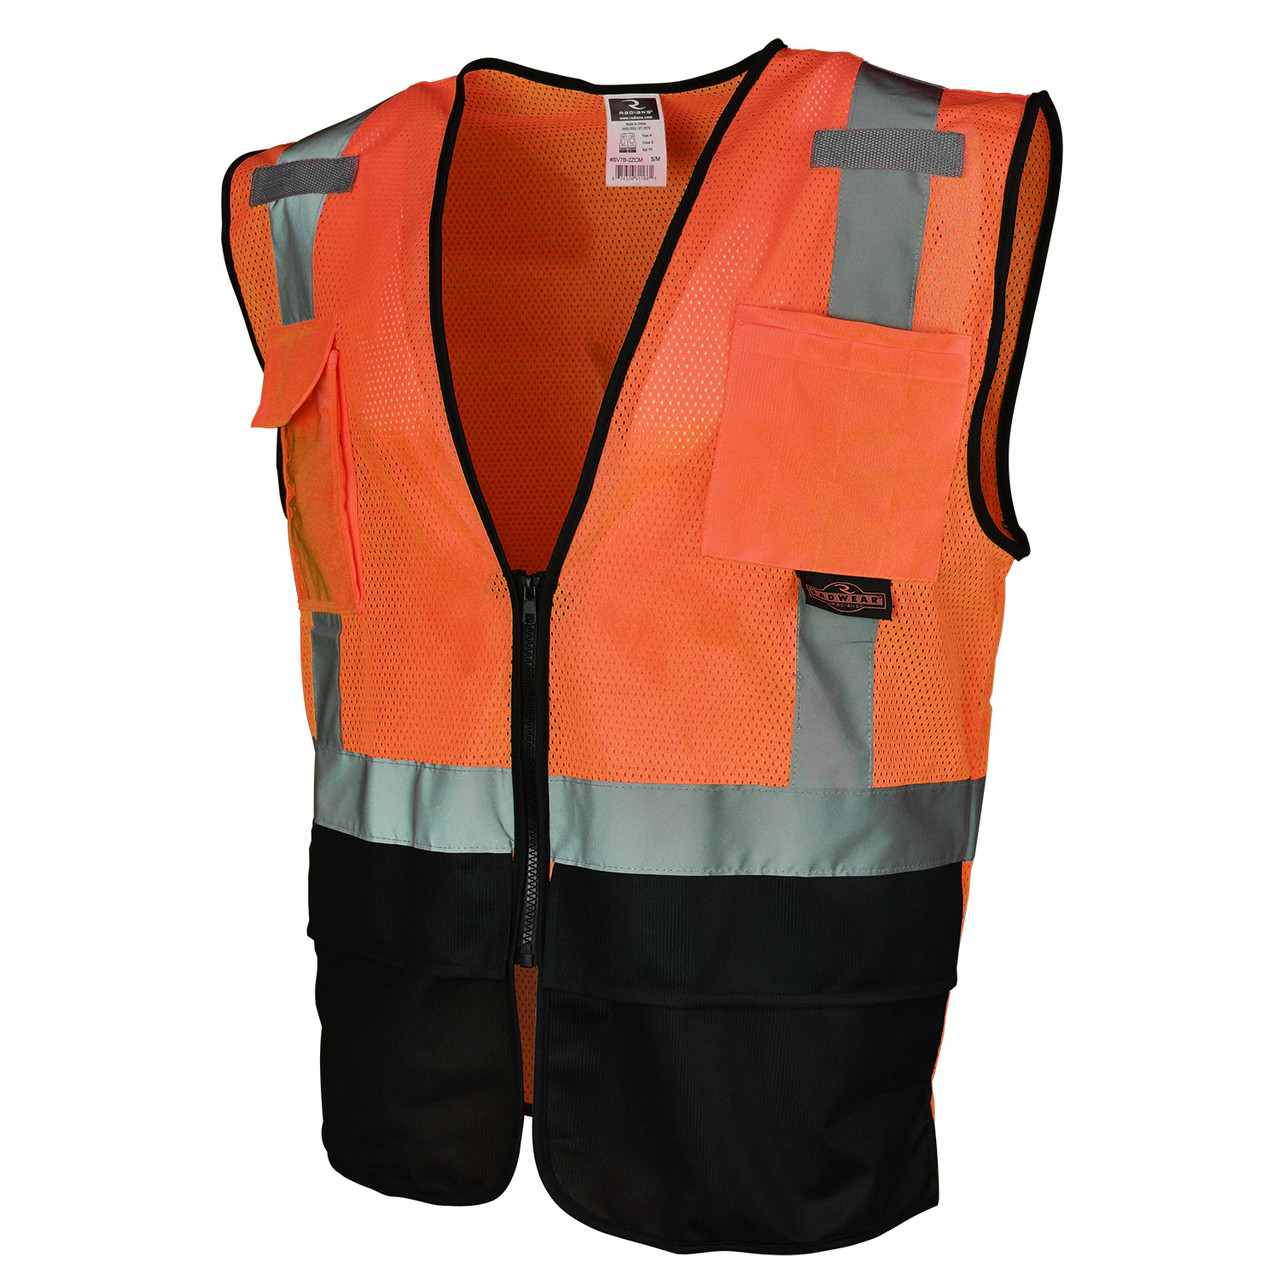 Hi-Viz Orange 4X-Large/5X-Large Inc. Radians SV7E-2ZOM-4X/5X Class 2 Surveyor Safety Vest 